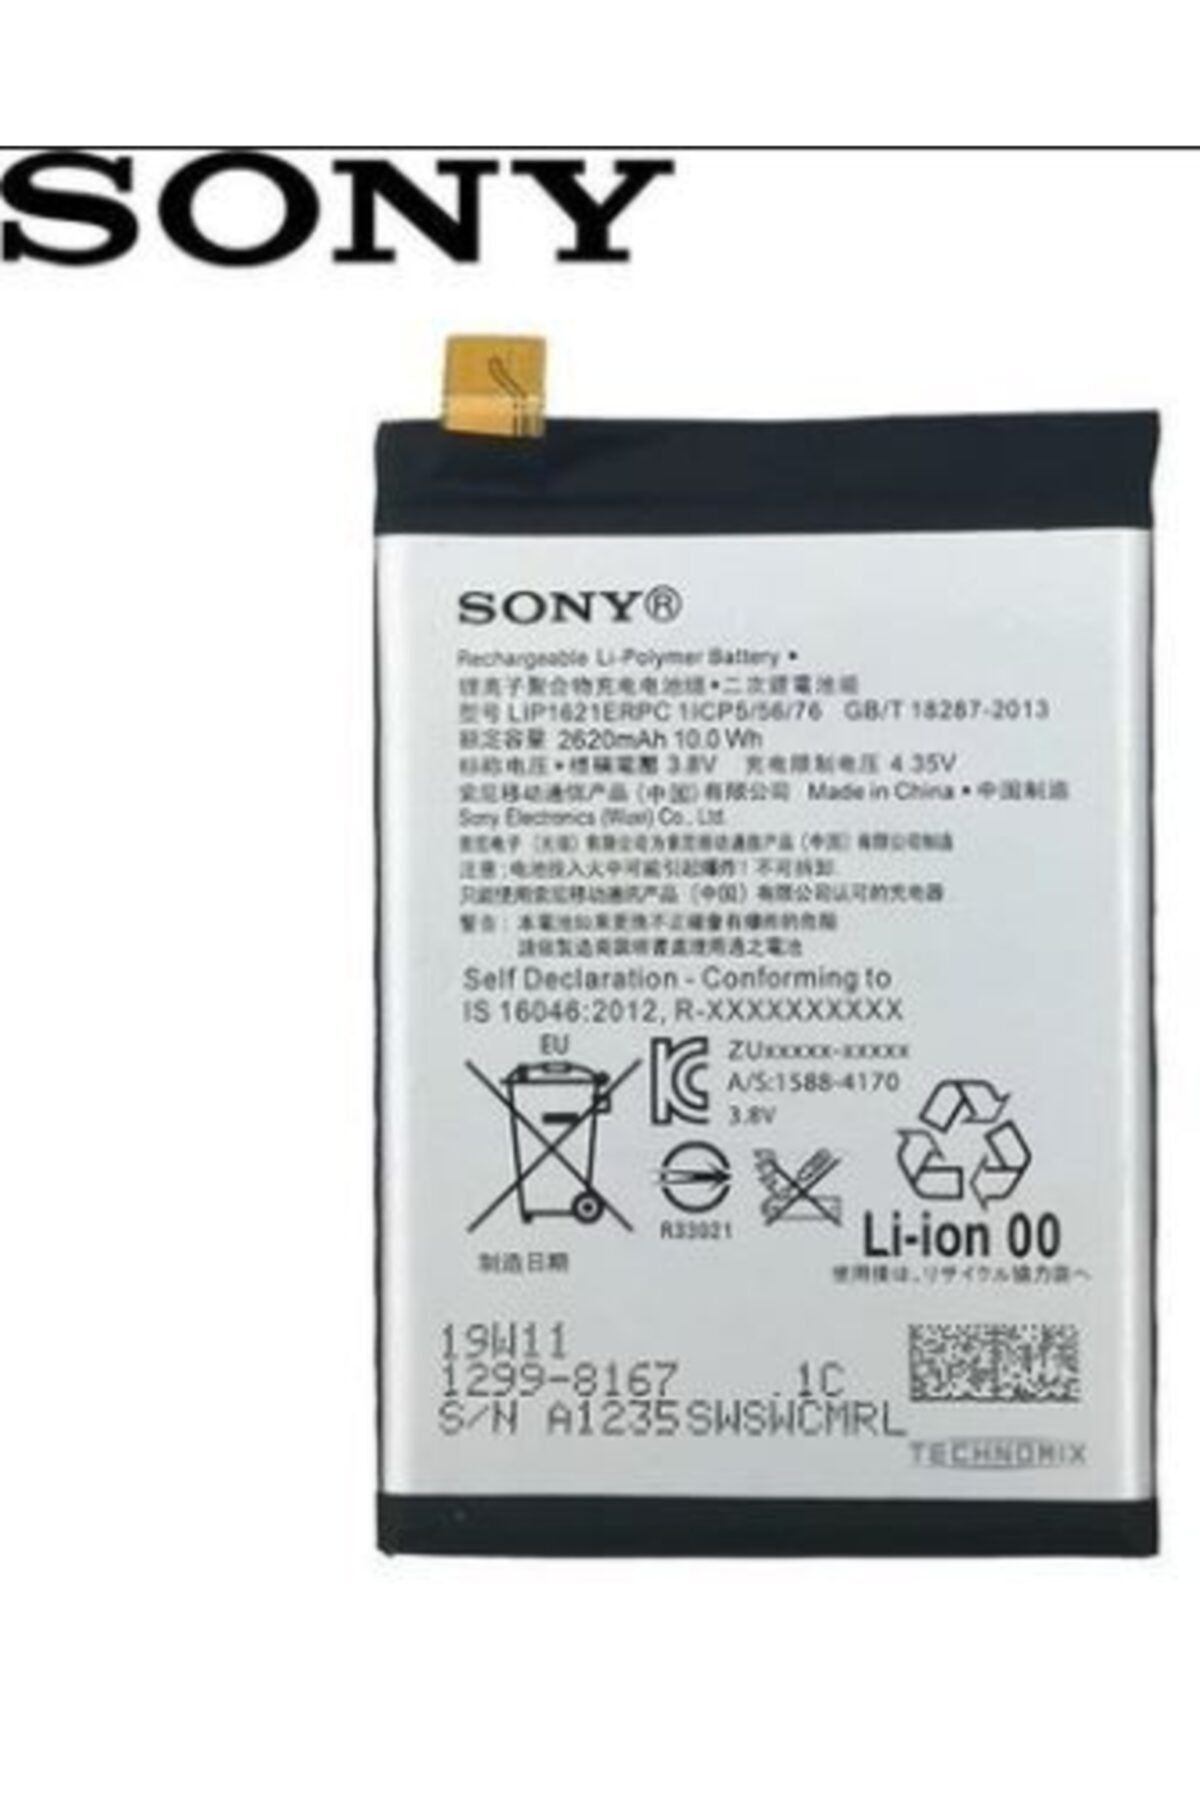 Sony Xperia L1 (g3311) Batarya Pil Lıp1621erpc